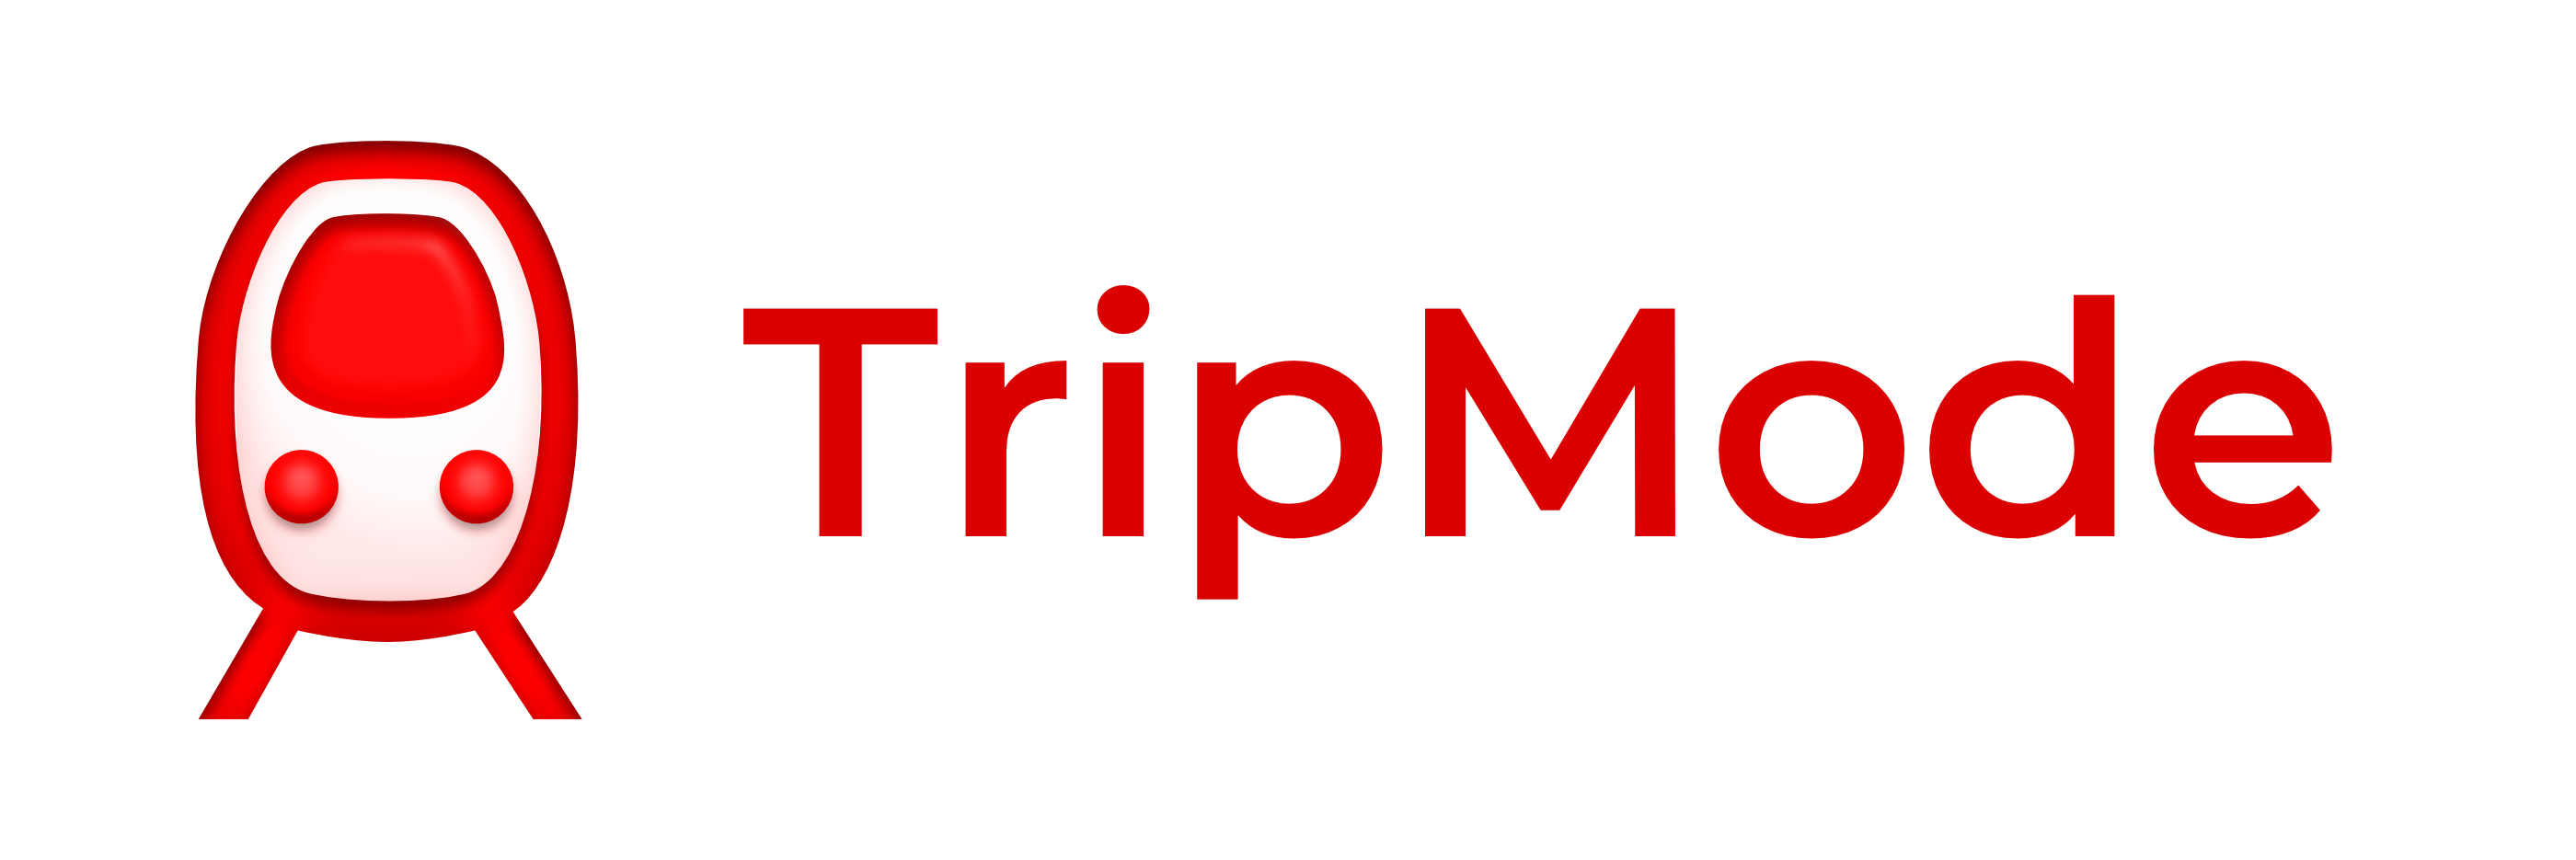 TripMode logo and text